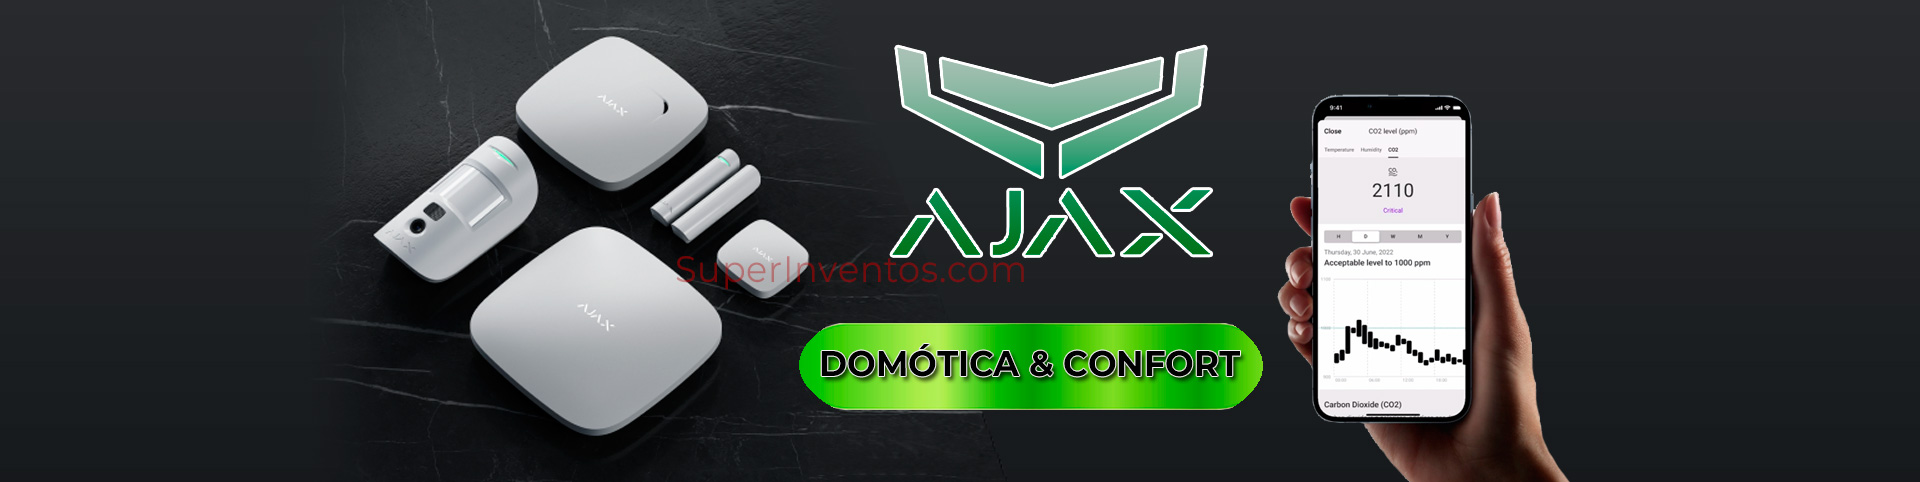 Slide Ajax Domotica